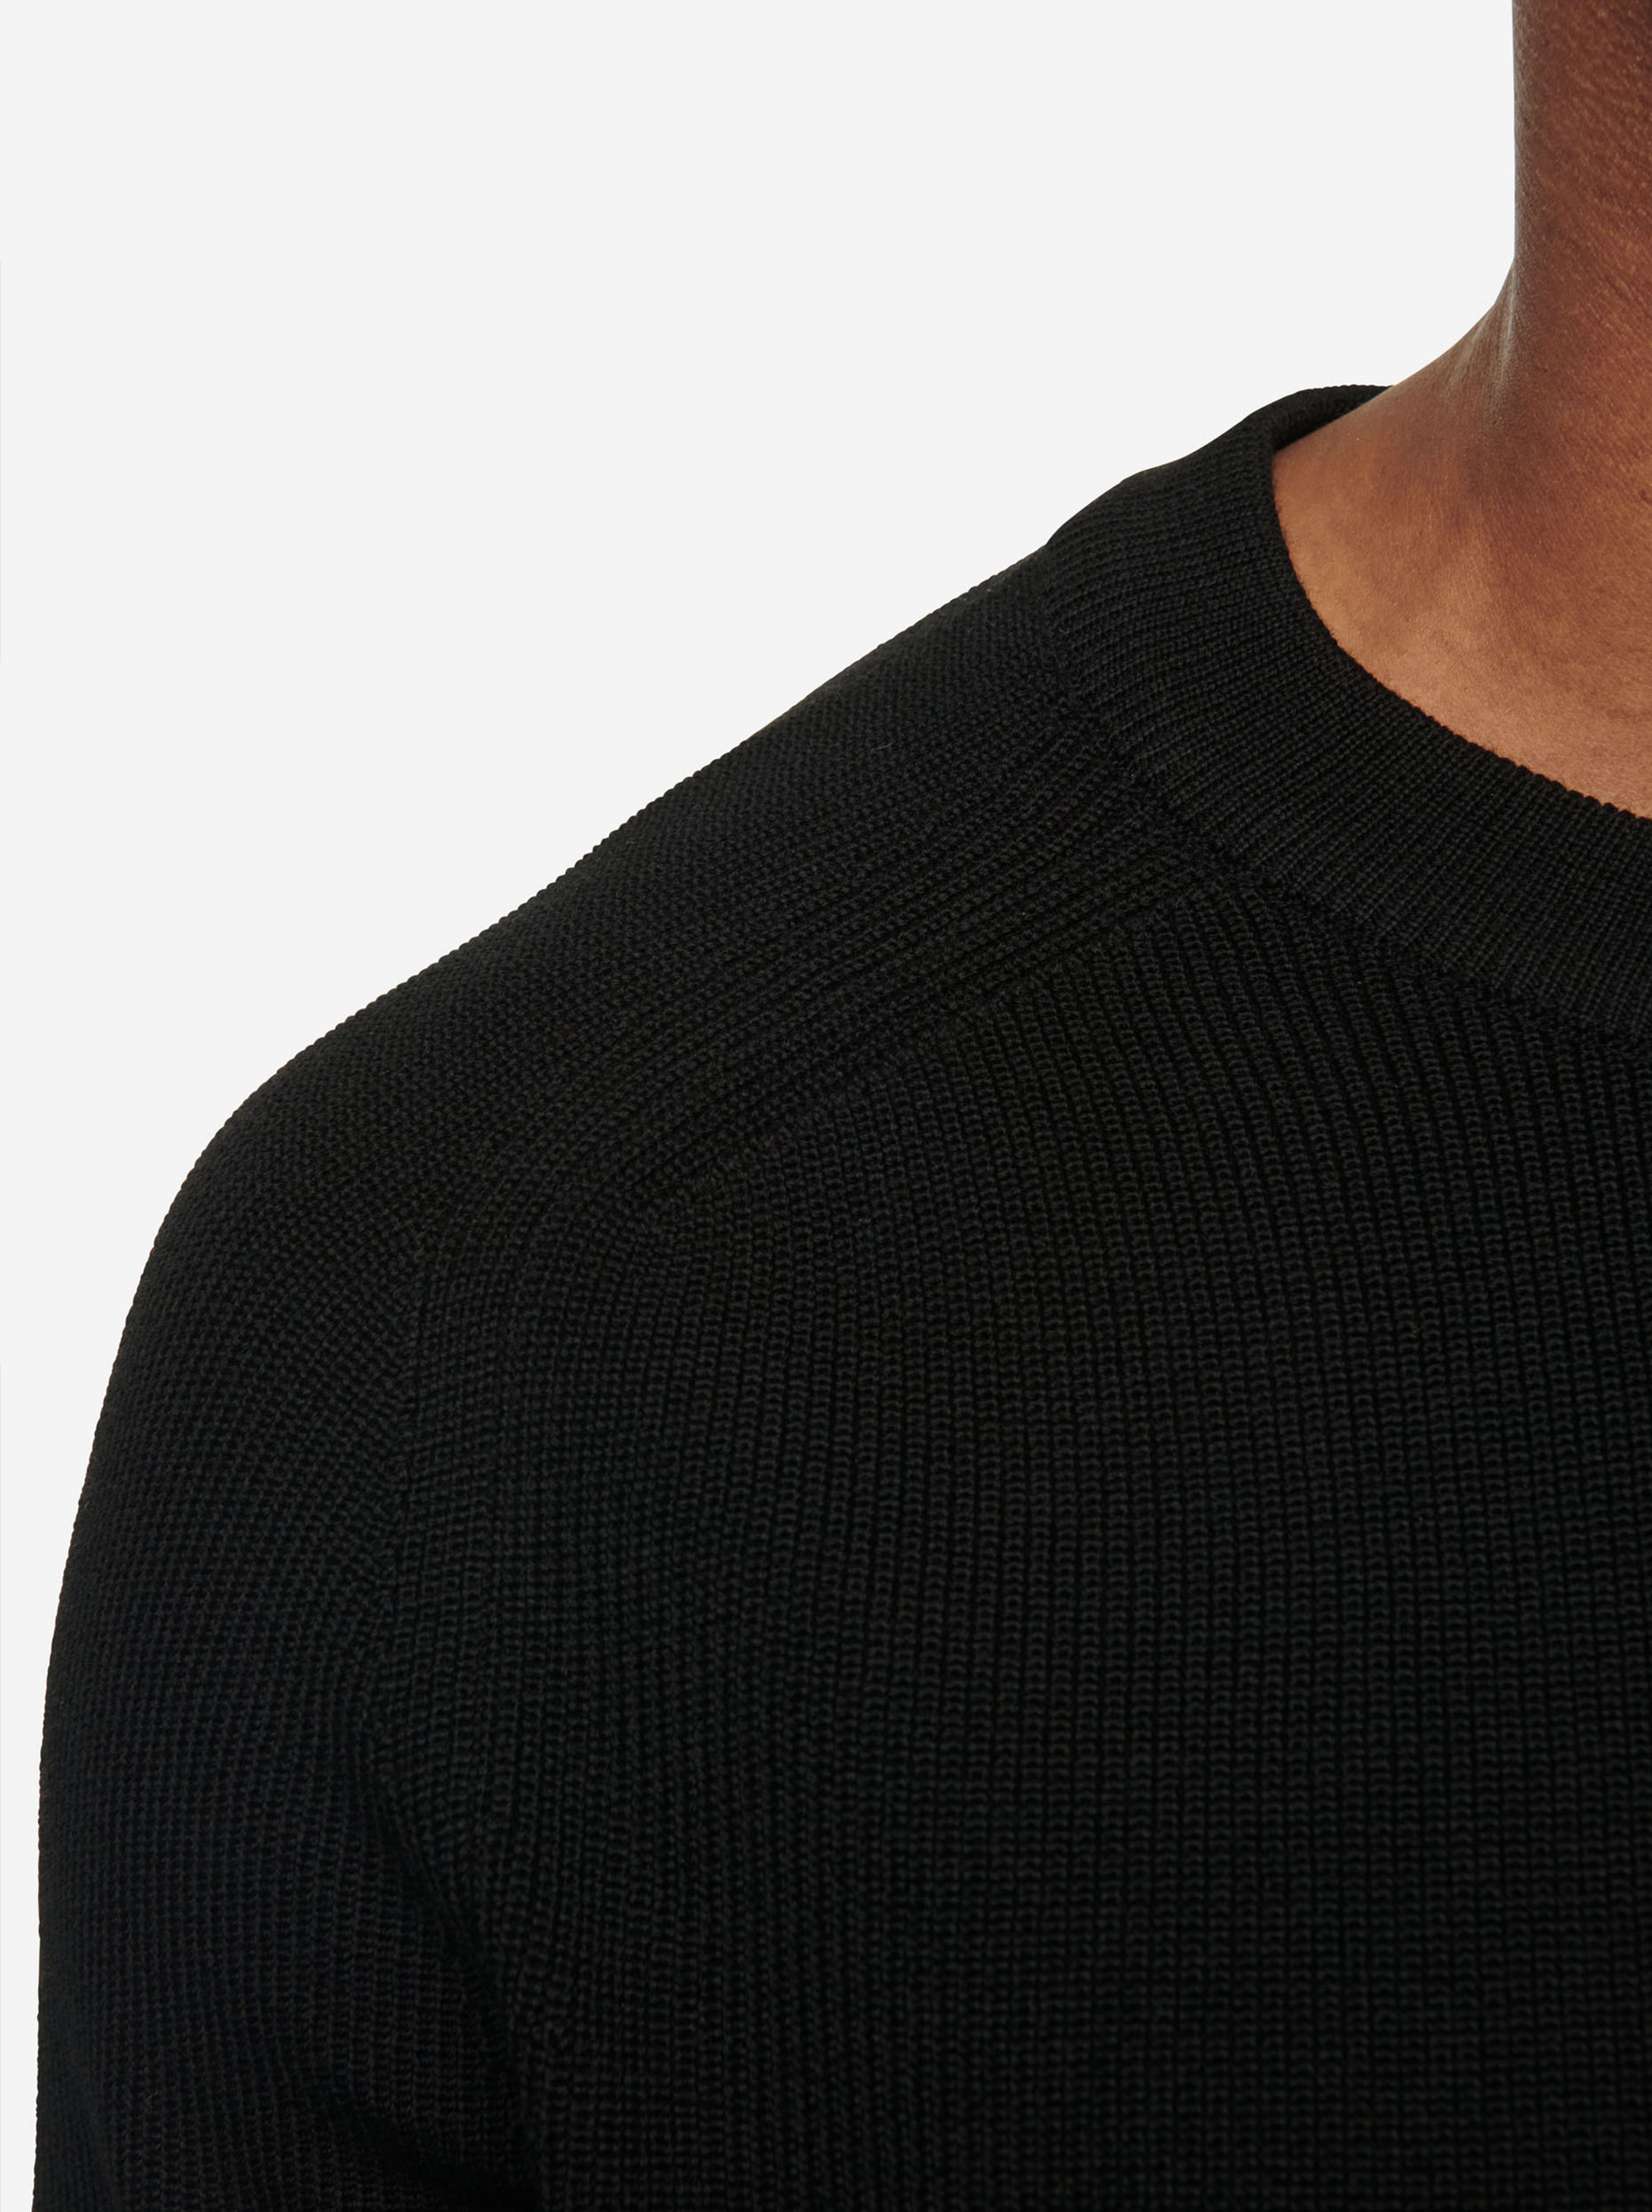 Teym - The Merino Sweater - Men - Black - 9